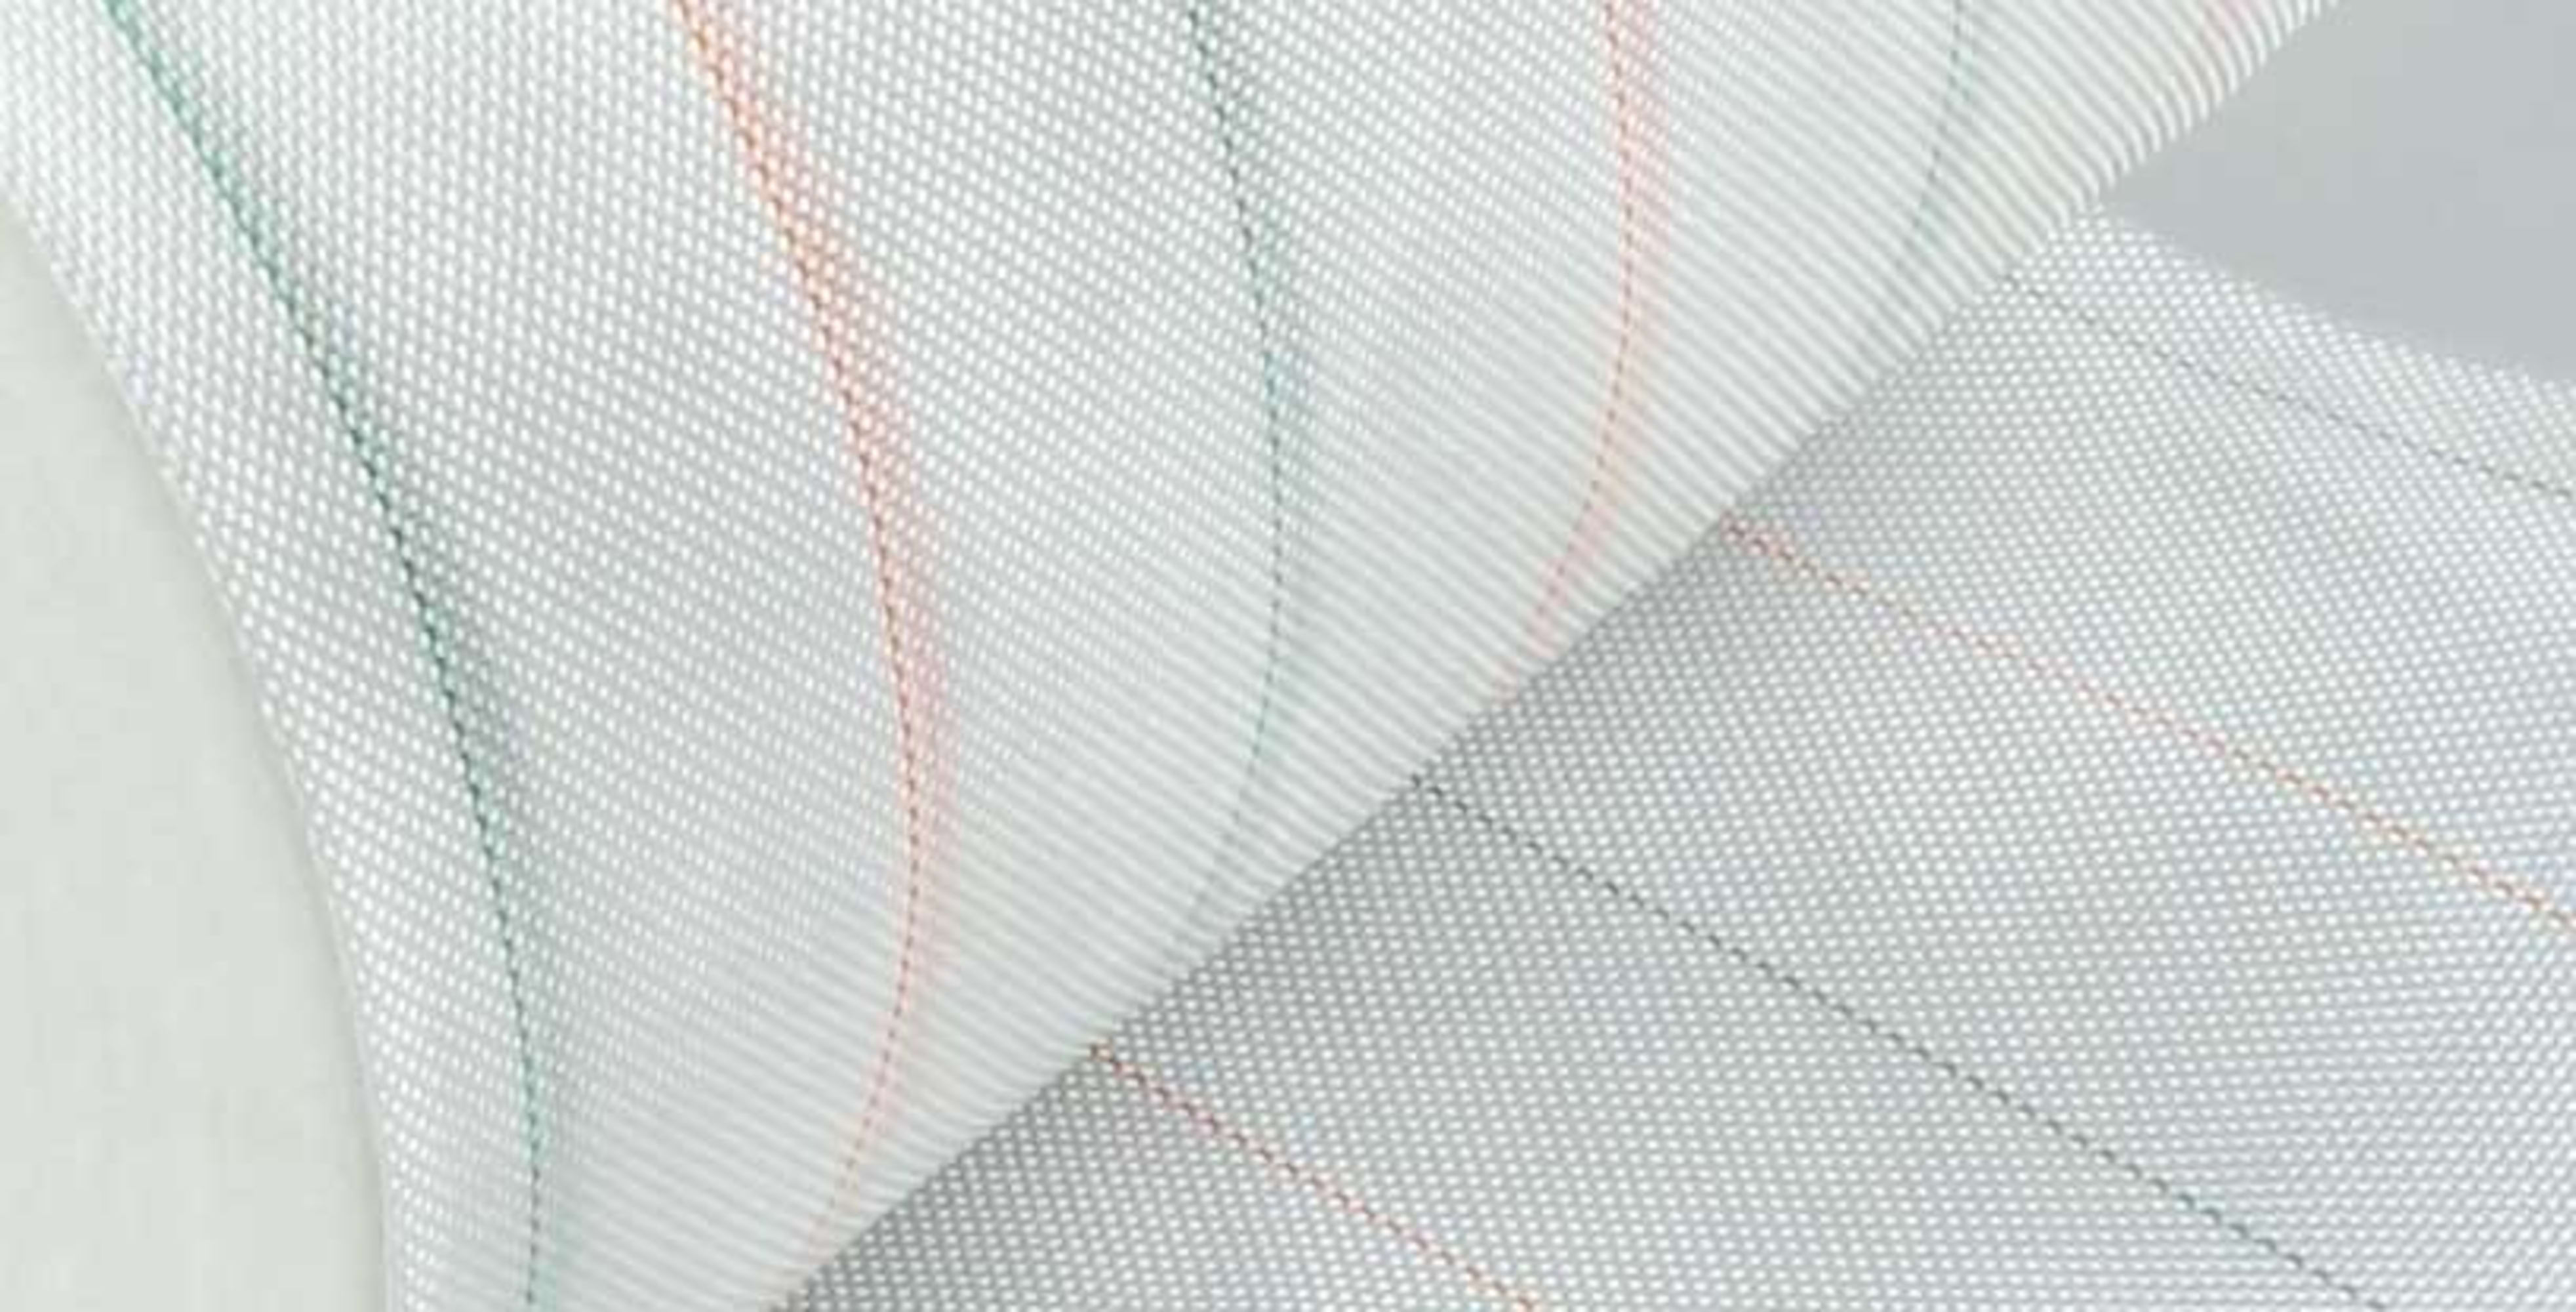 Peel ply PES 90 g/m² (plain weave) 128 cm, image 2